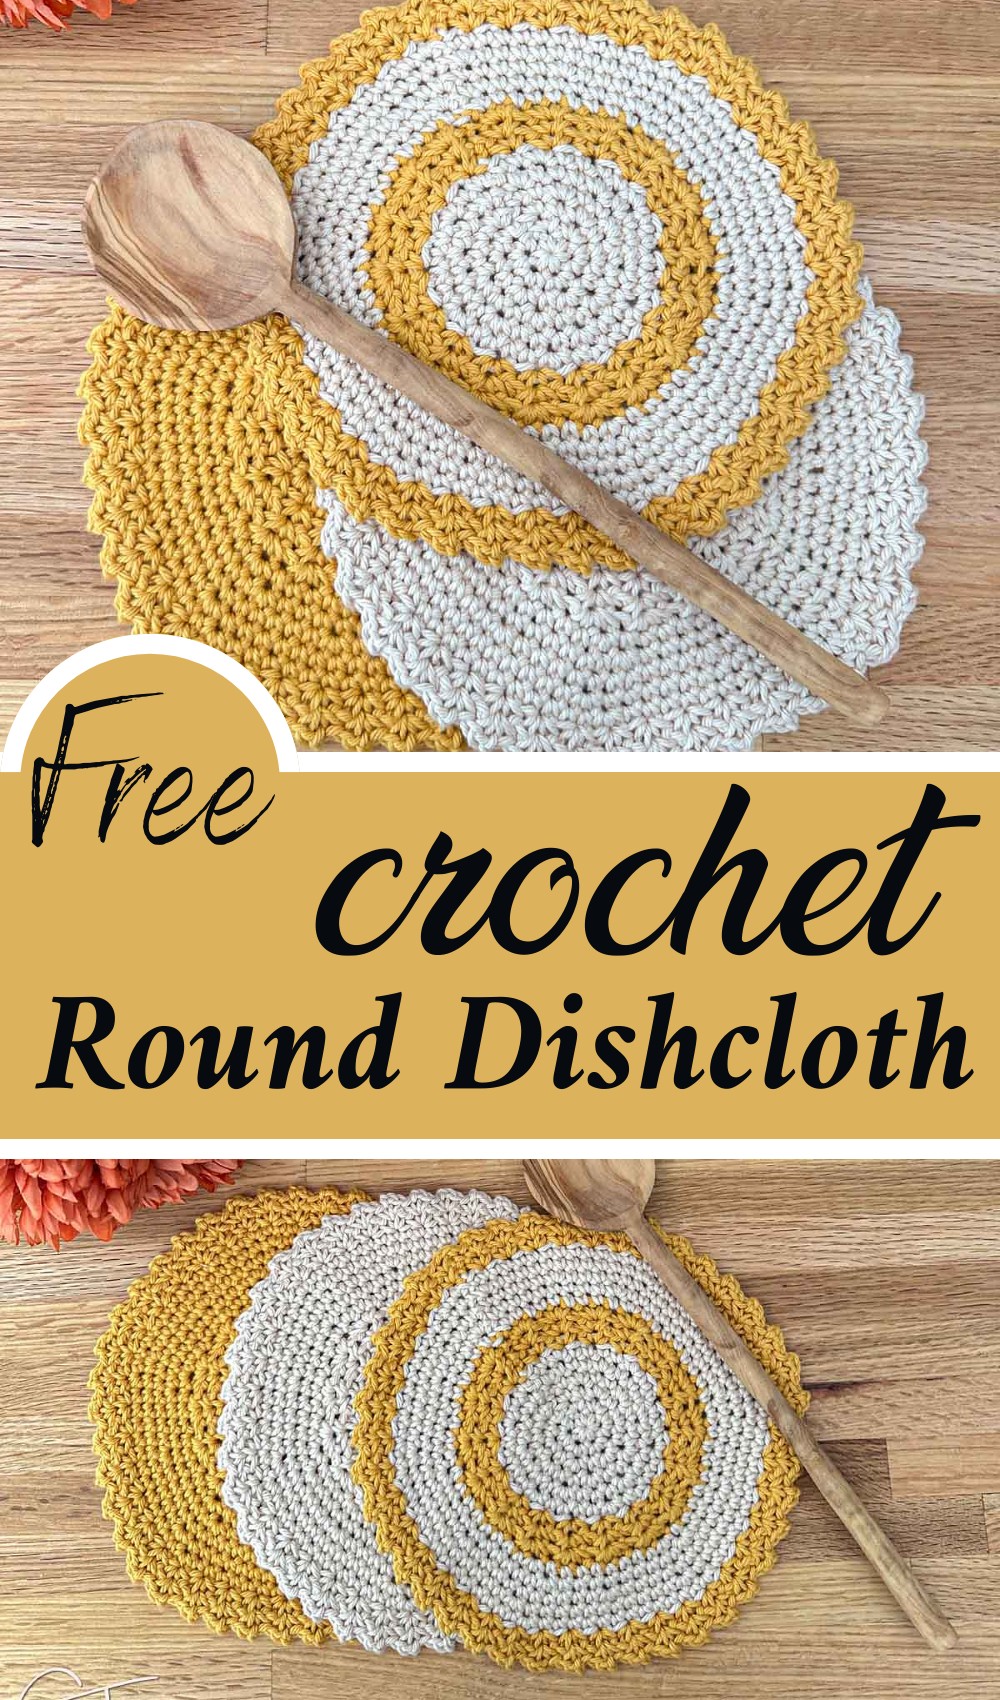 Round Dishcloth